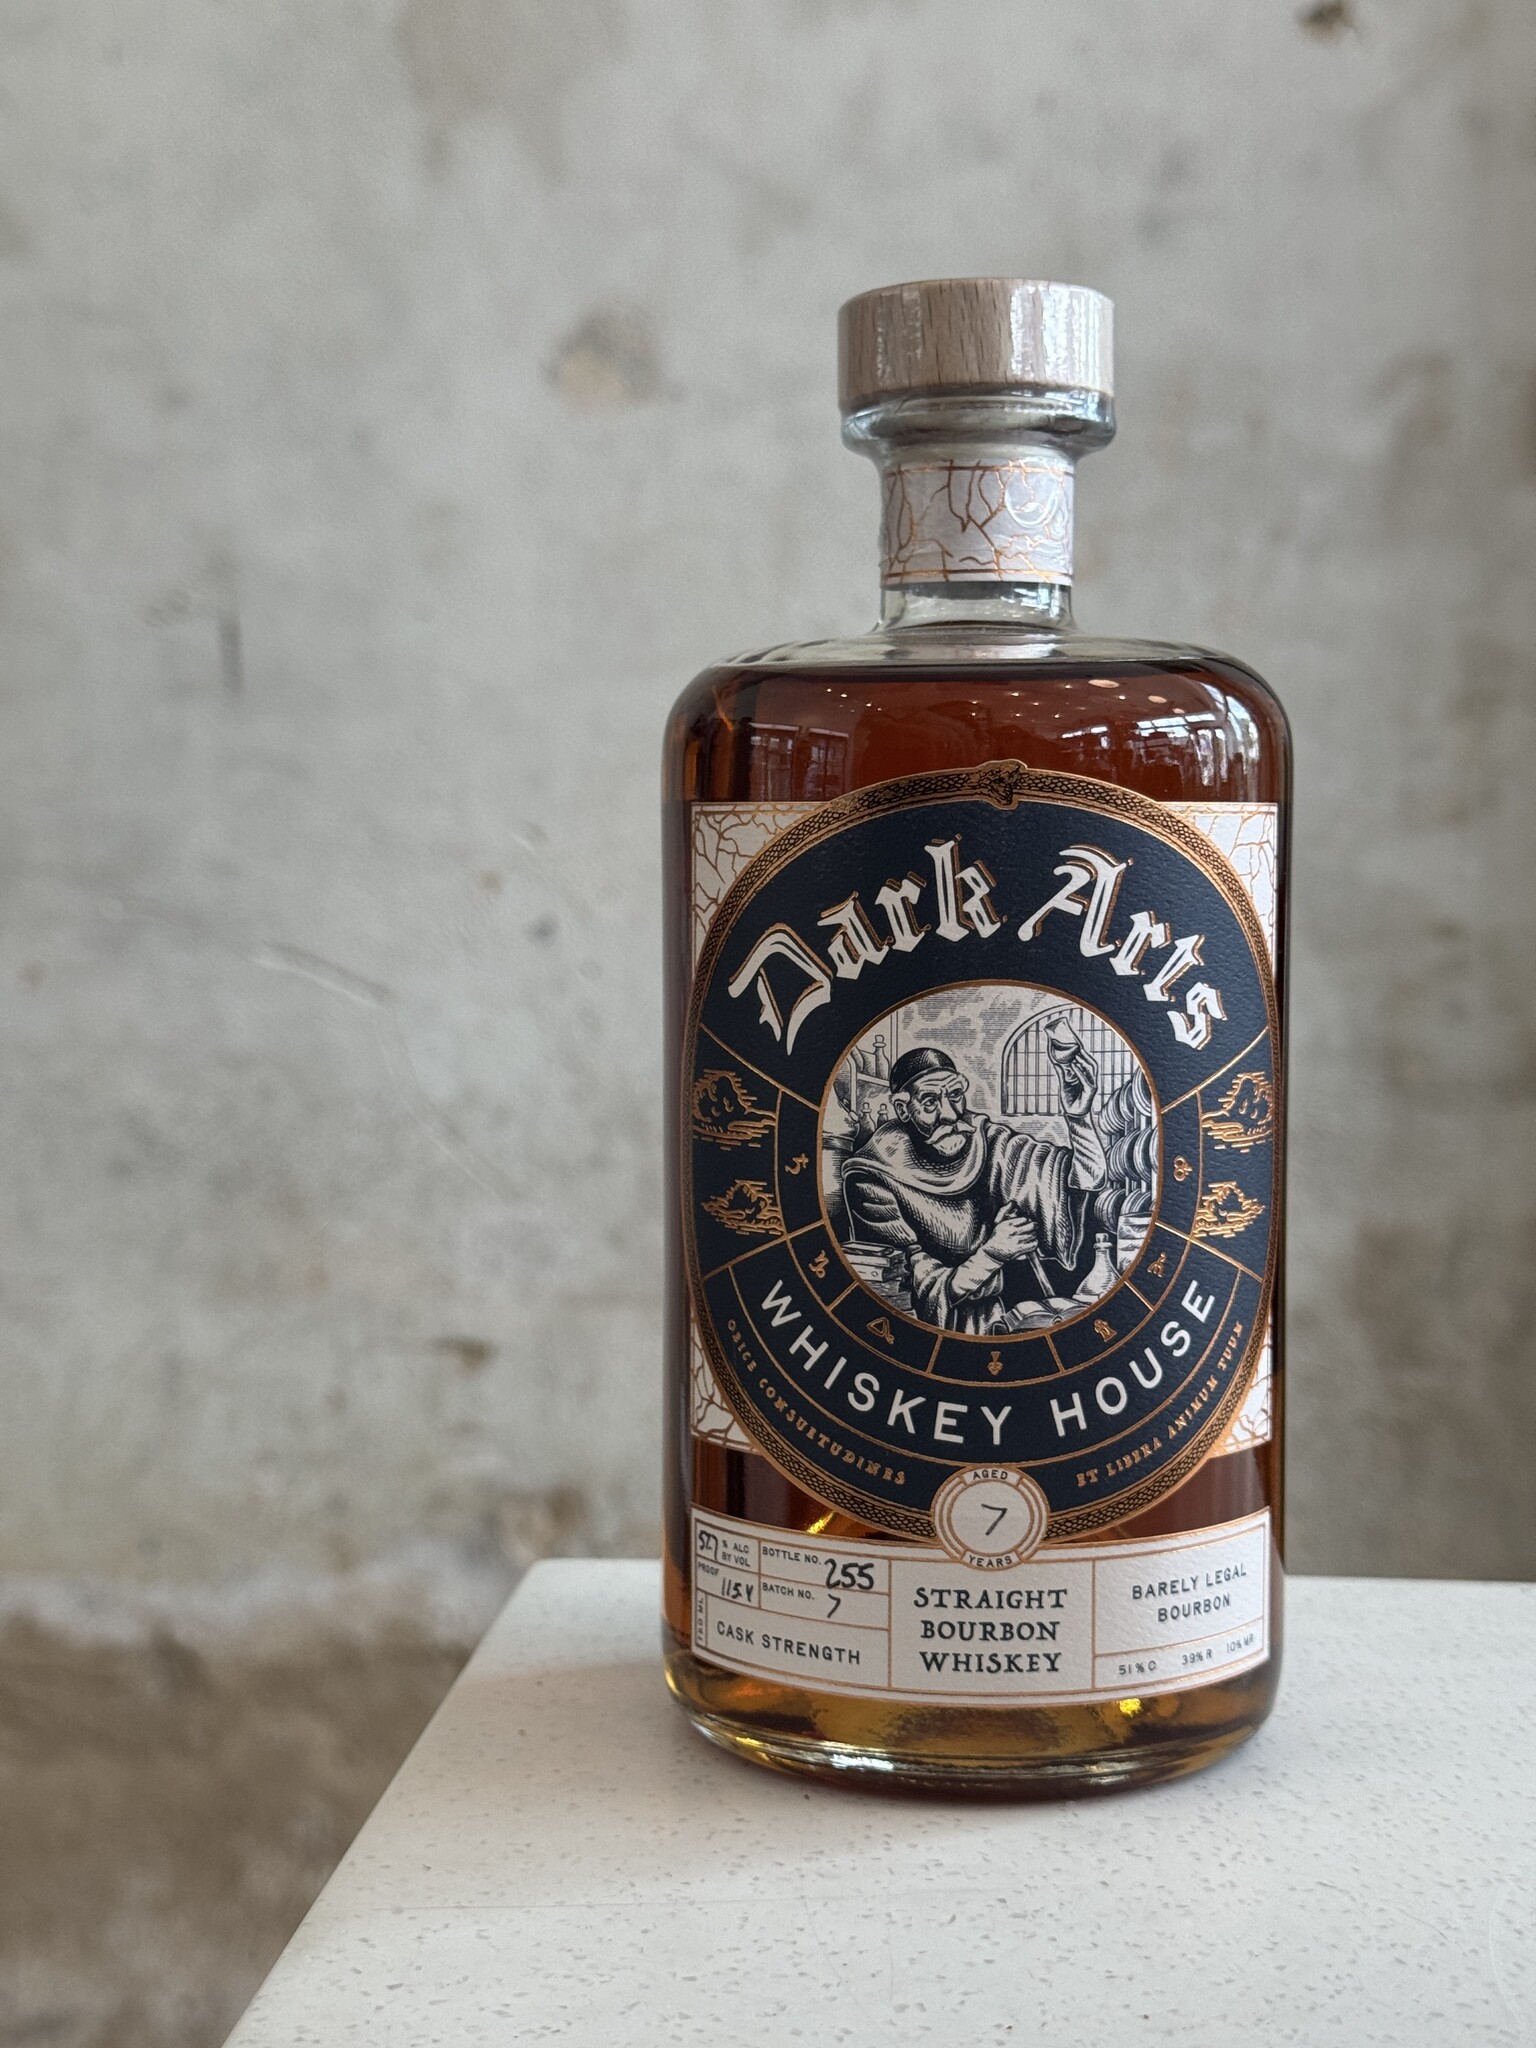 Dark Arts Barely Legal Bourbon